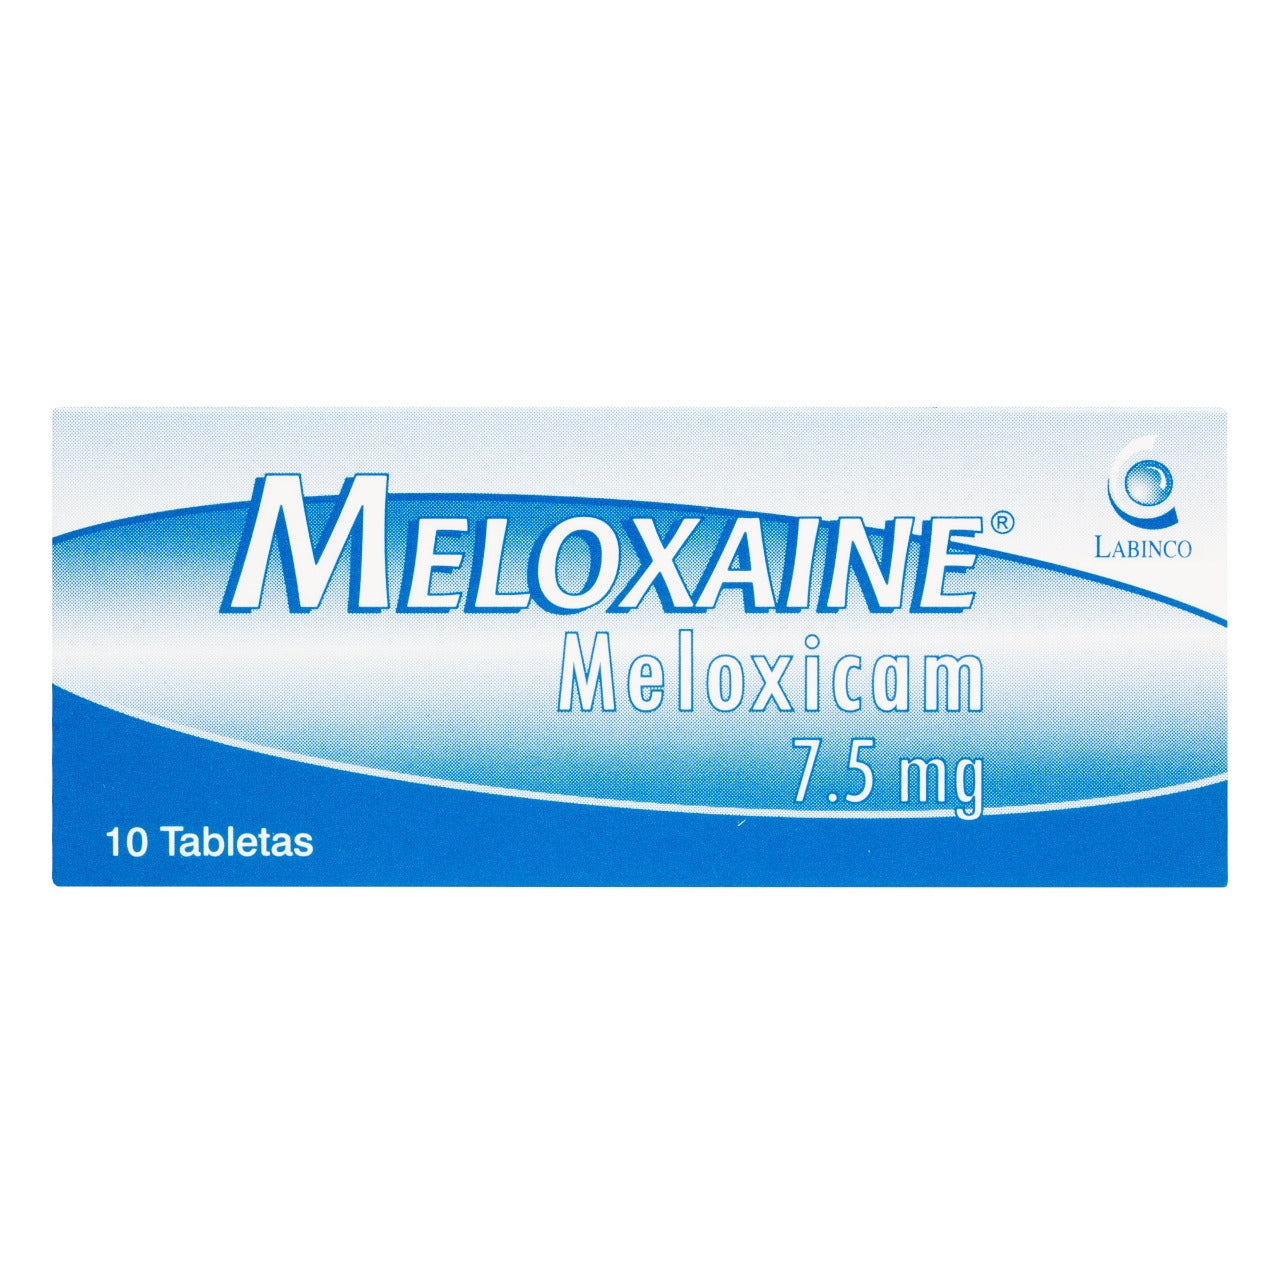 MELOXAINE 7.5 MG (MELOXICAM) 10 TABLETAS LB